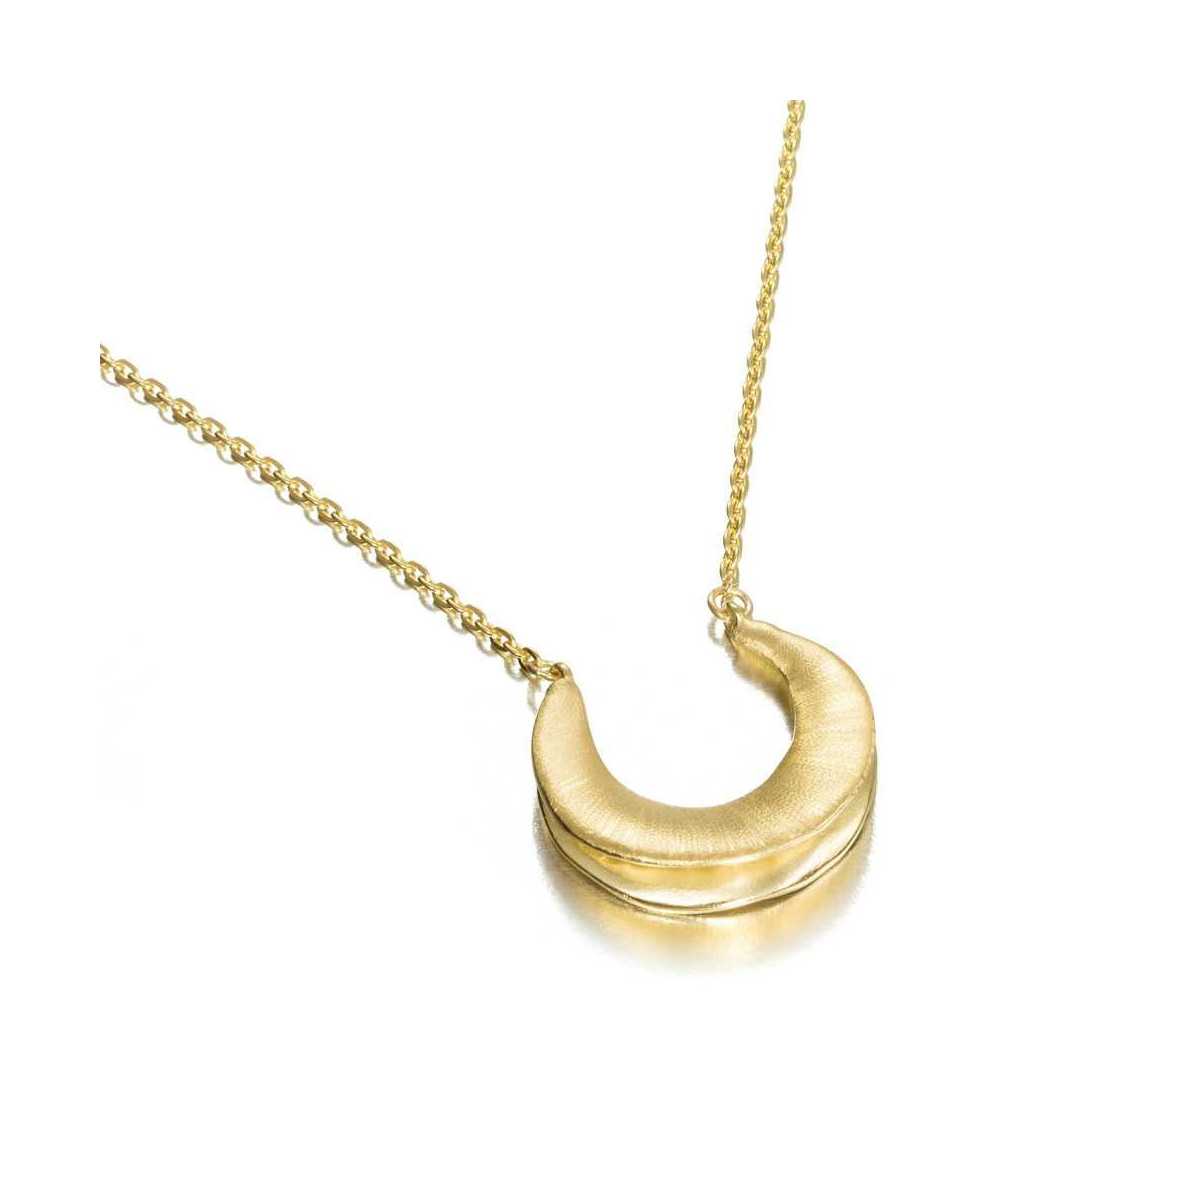 ODYSSEY Necklace  in Silver. 18k Gold Vermeil